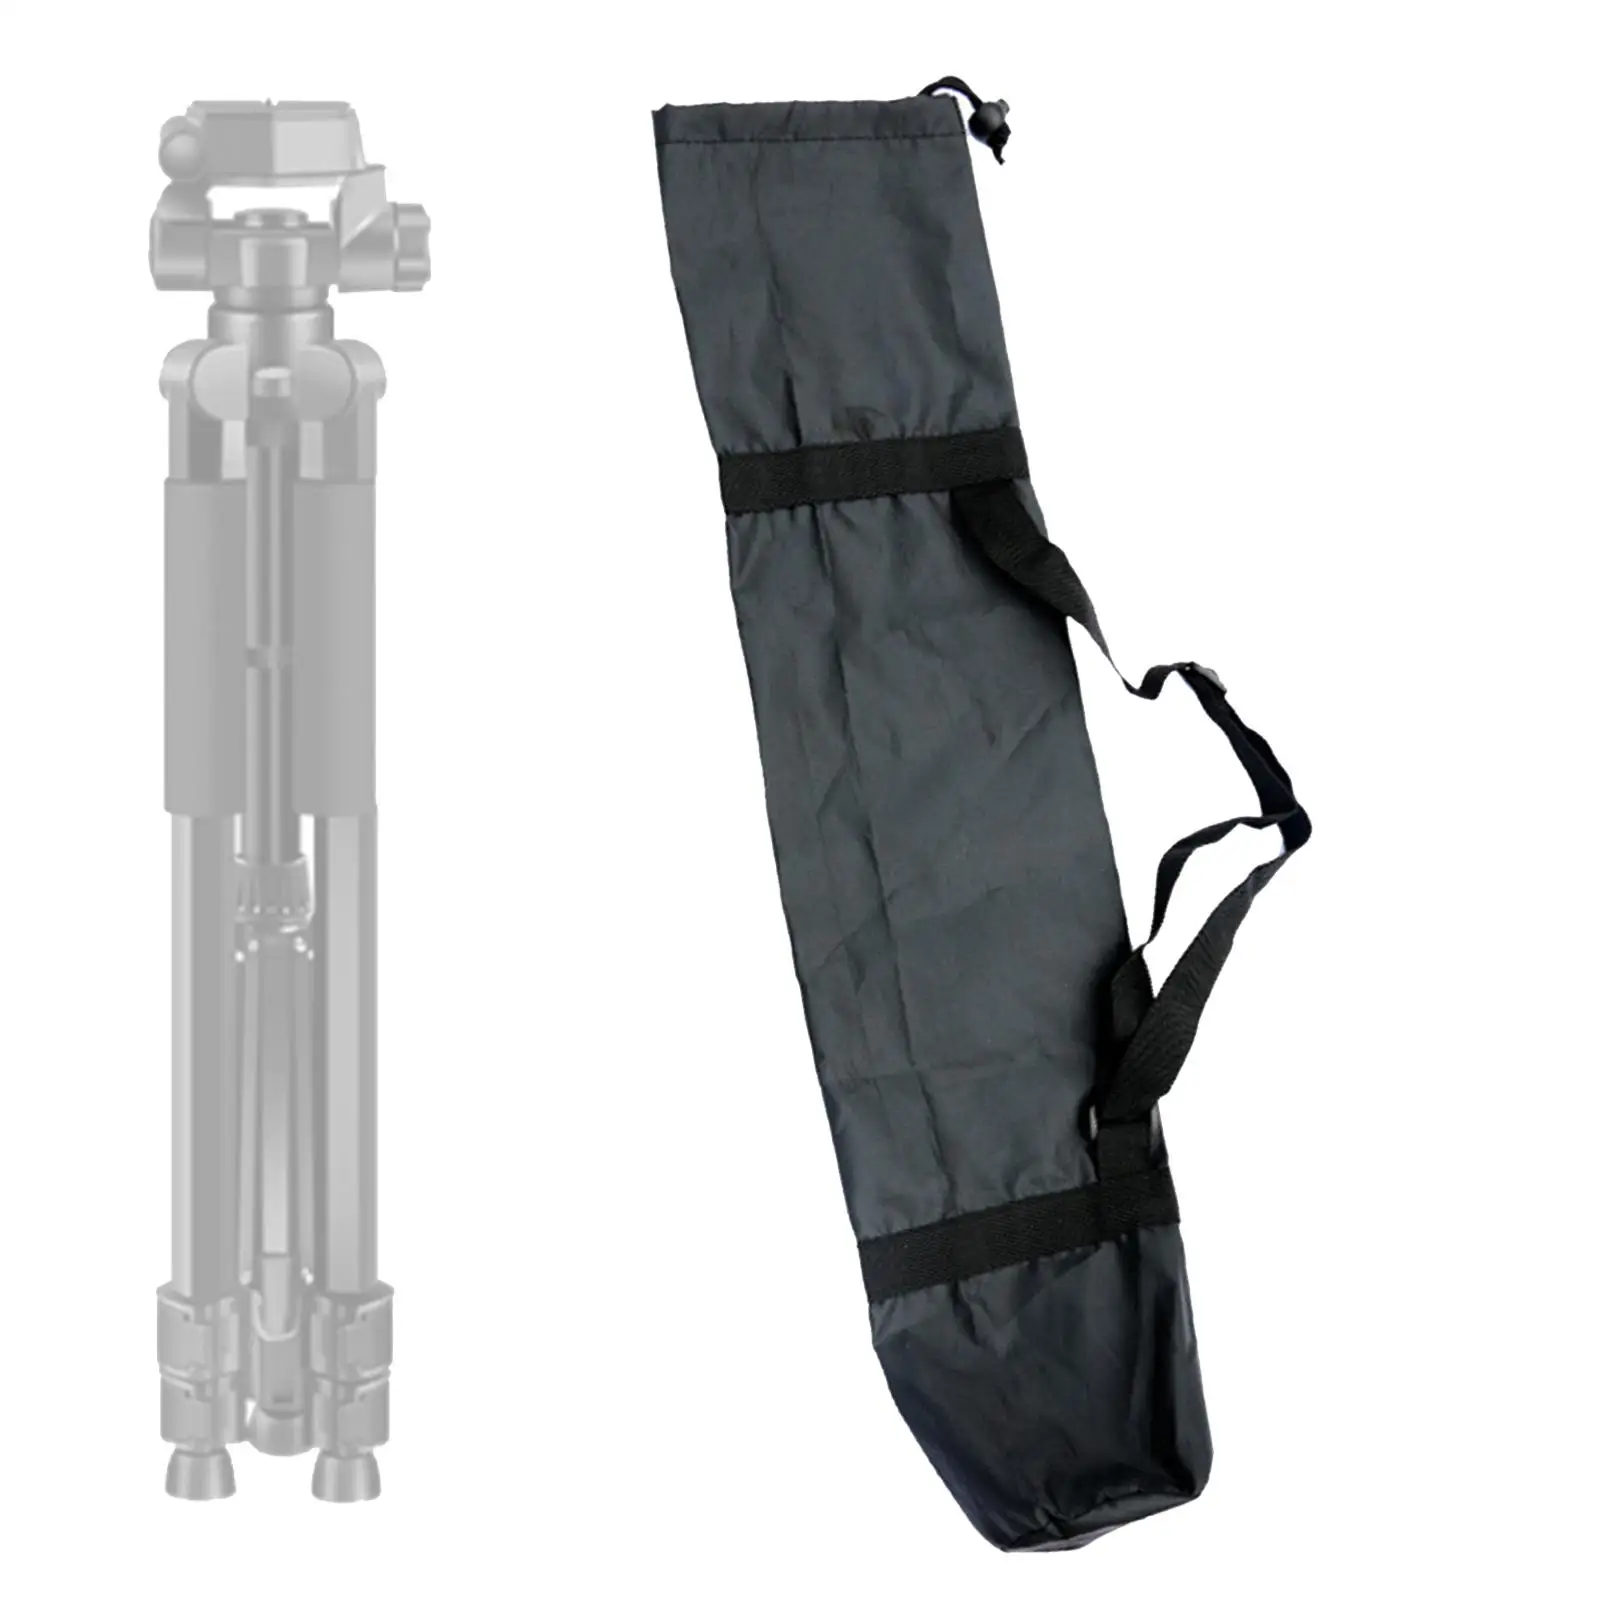 Drawstring Storage Bag Tote Portable Tripod Carrying Bag Yoga Mat Bag for Photography Photo Studio Equipment Light Stands